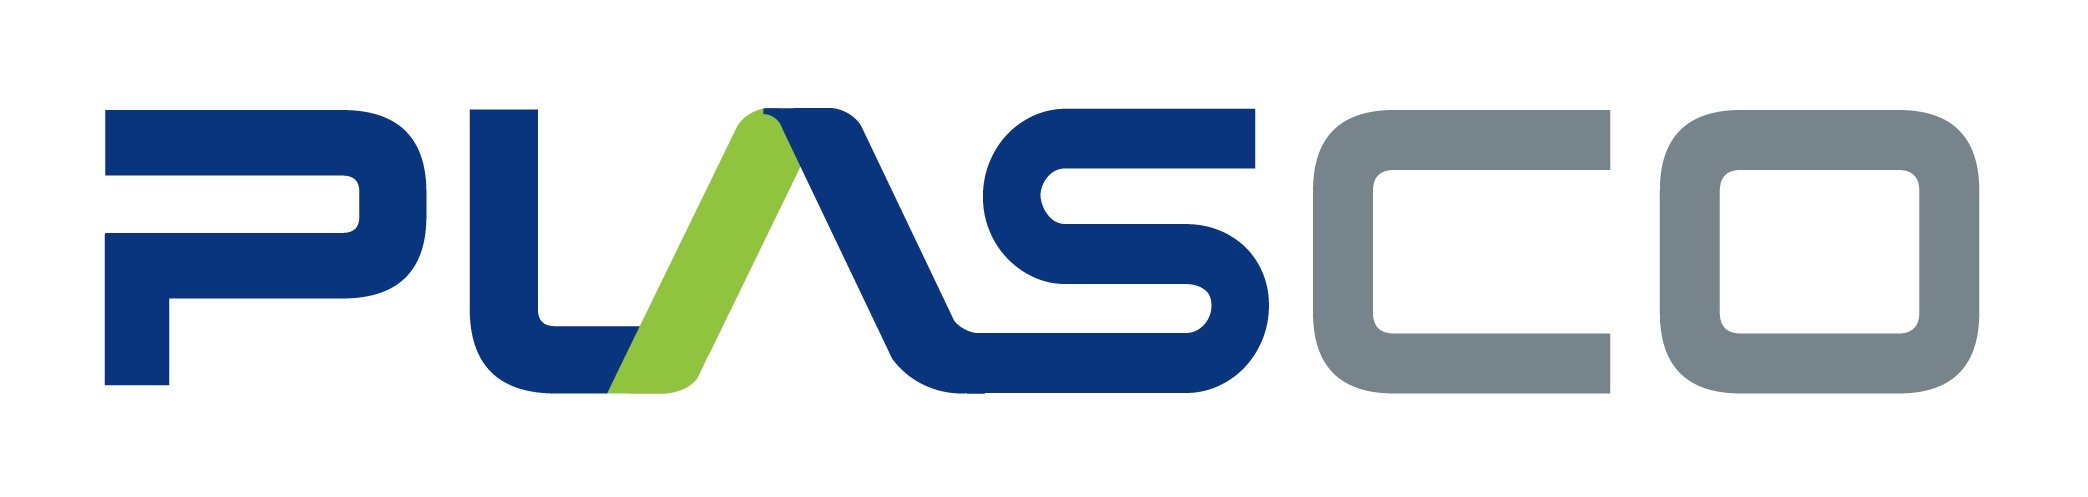 PLASCO-logo-1 - Andrea Lin